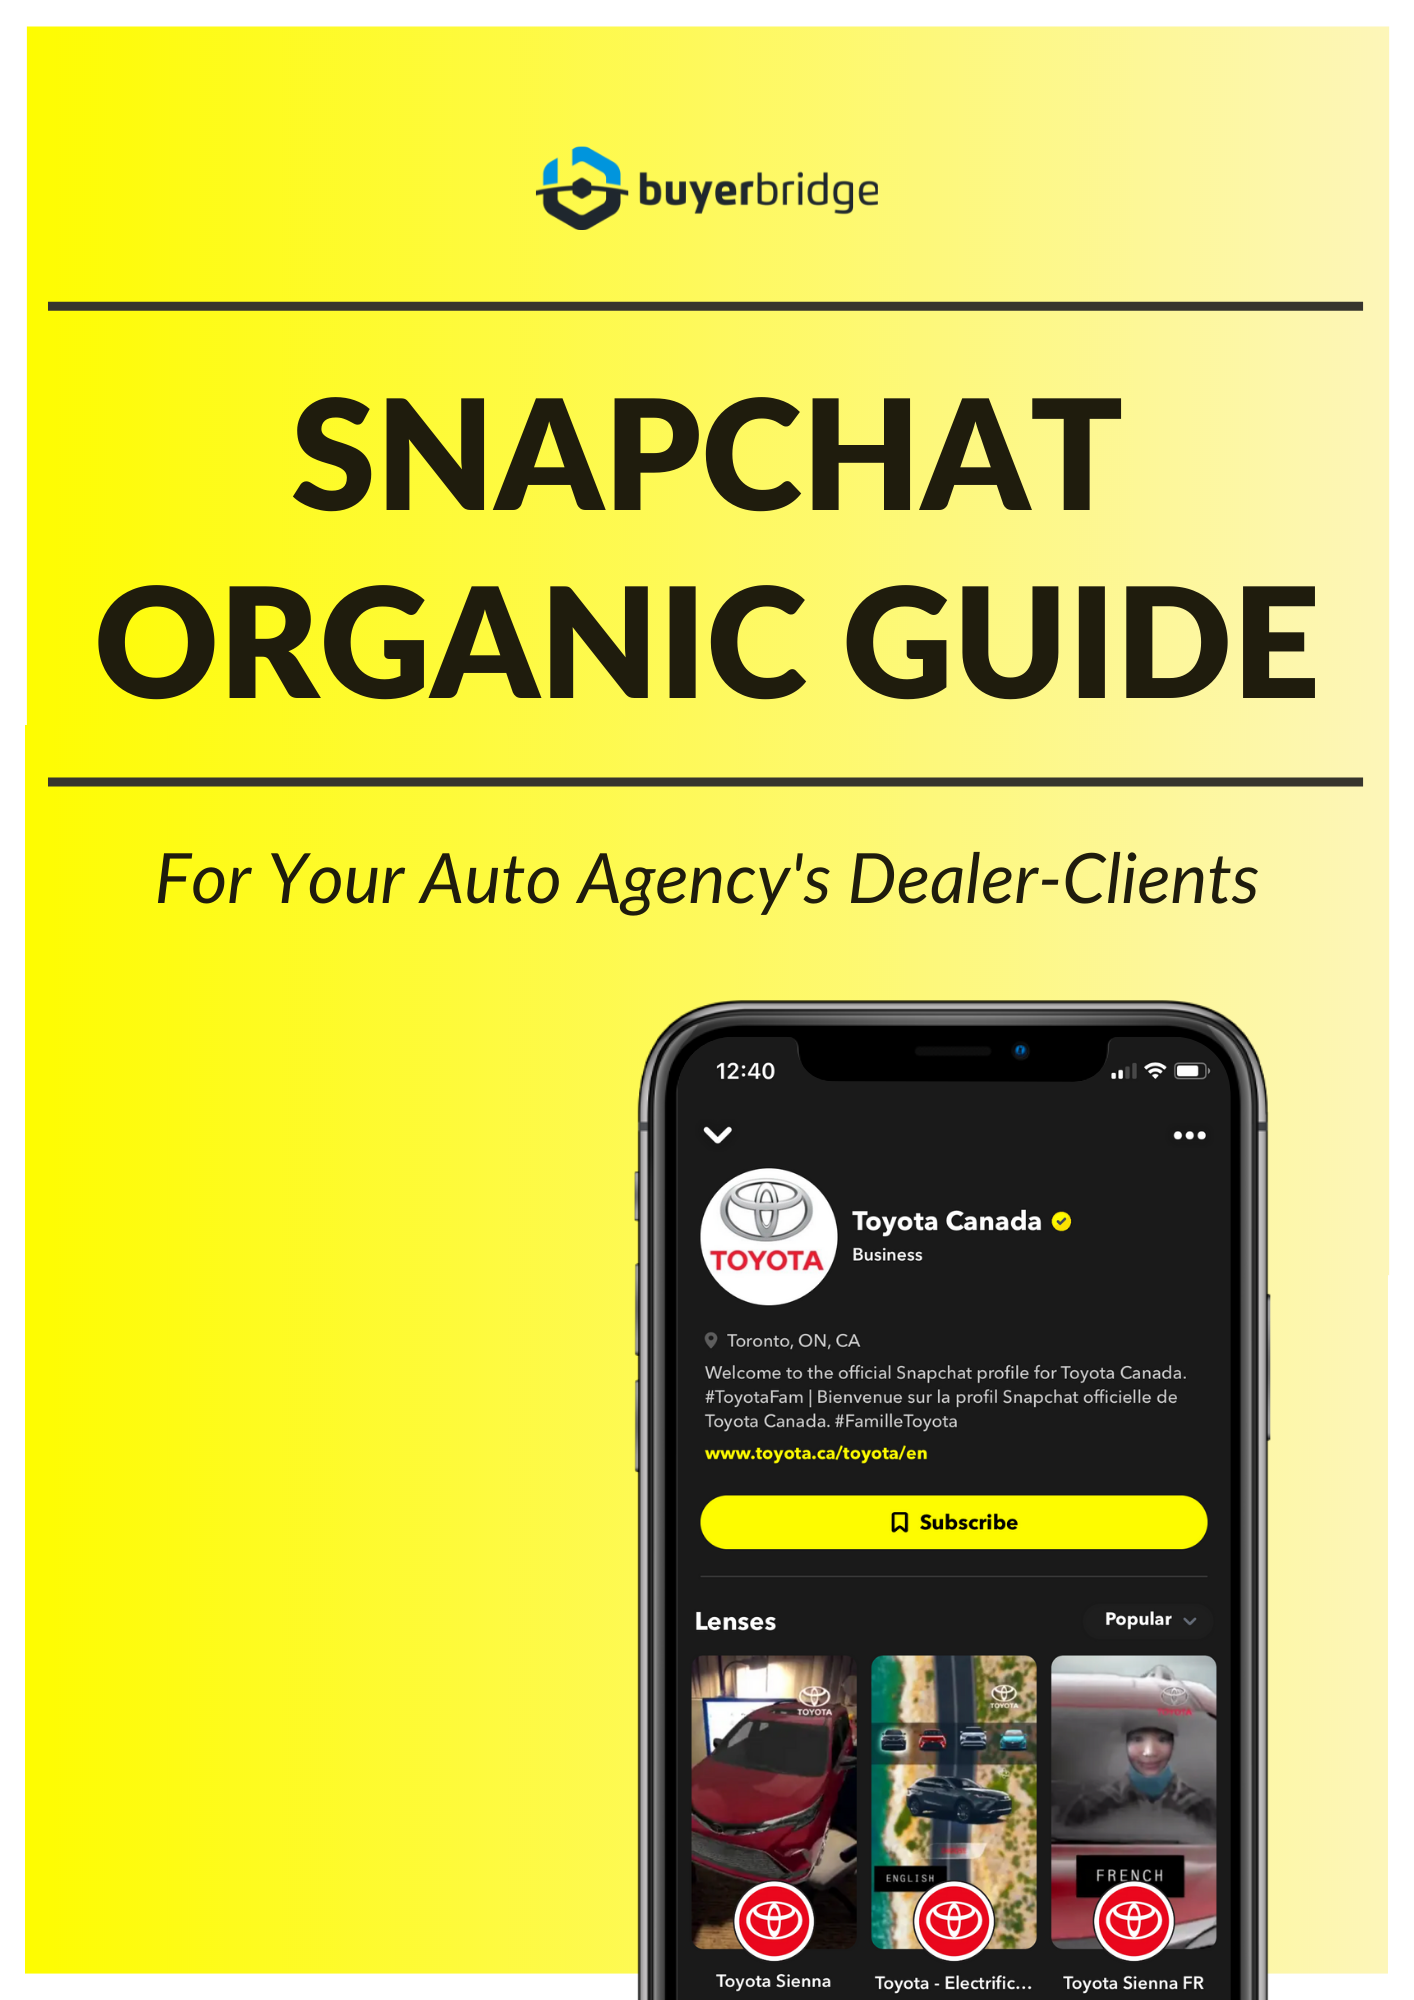 BuyerBridge Snapchat Organic Guide